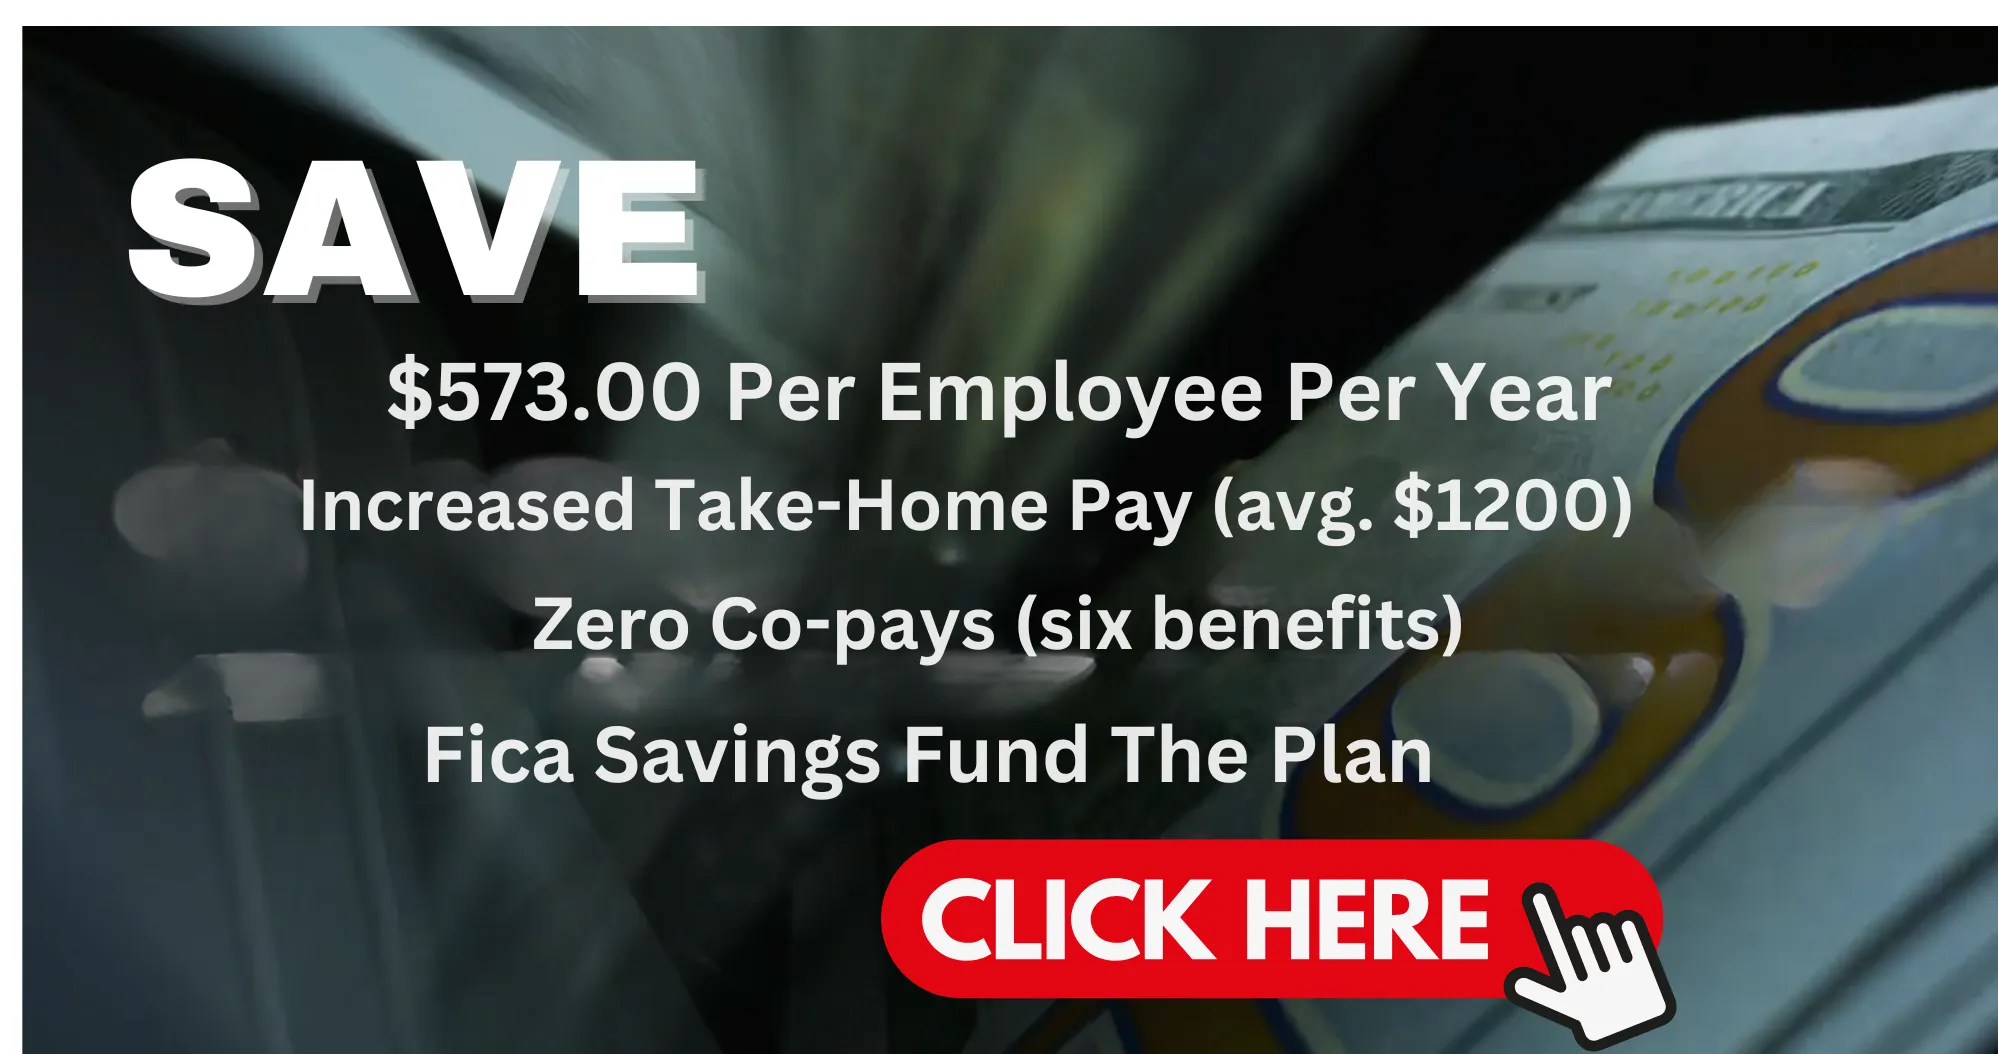 Save $573 Per Employee Per Year